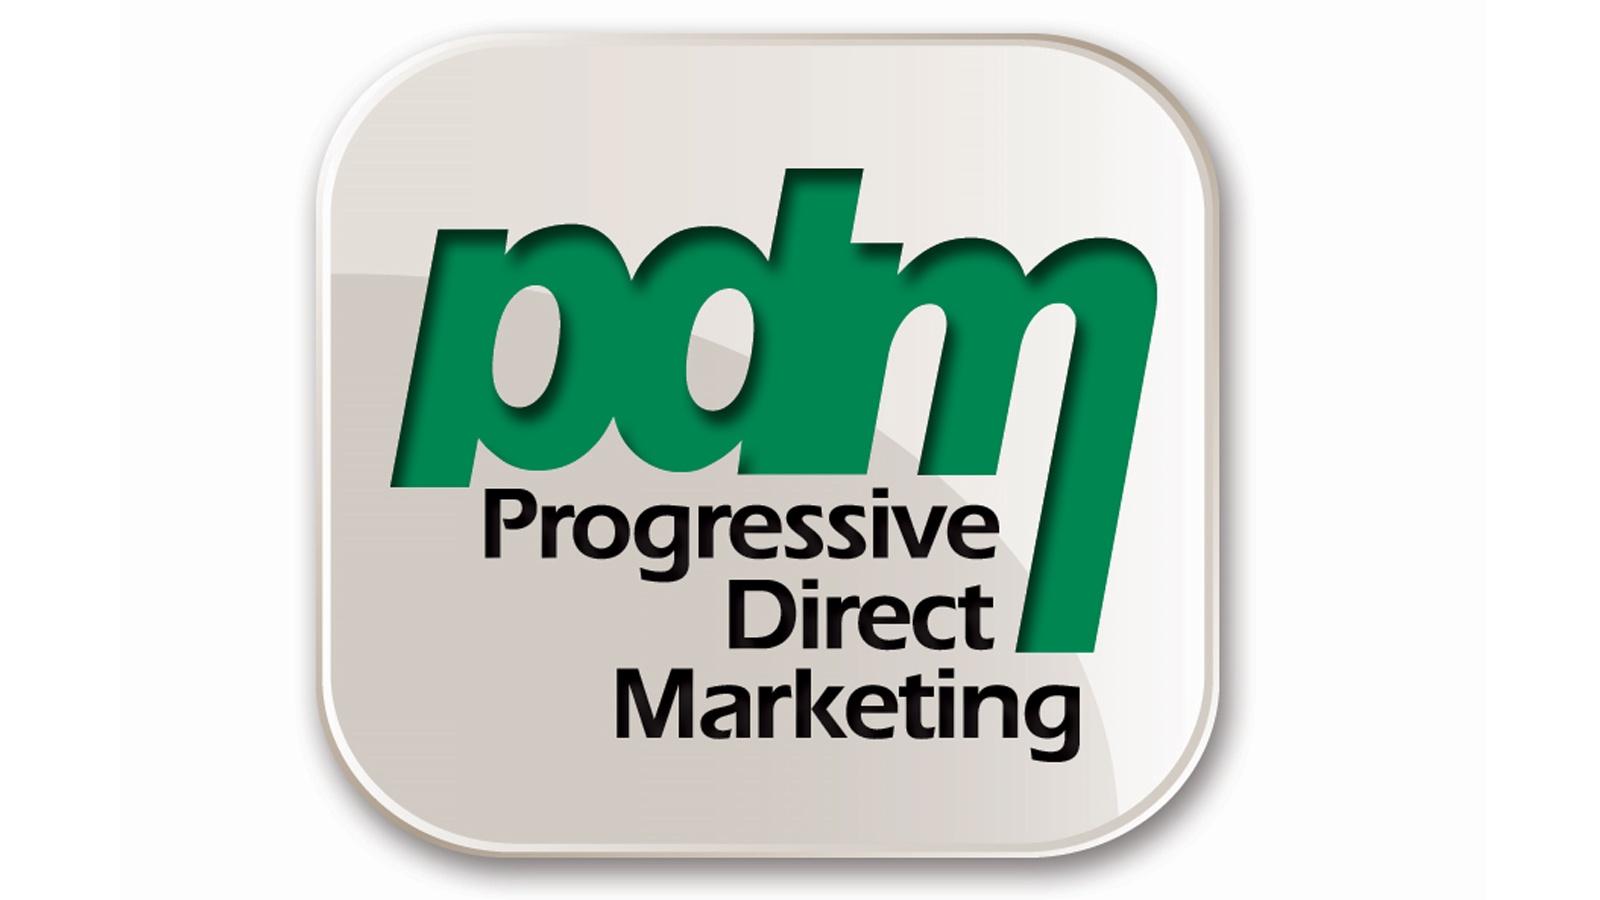 Progressive Direct Marketing